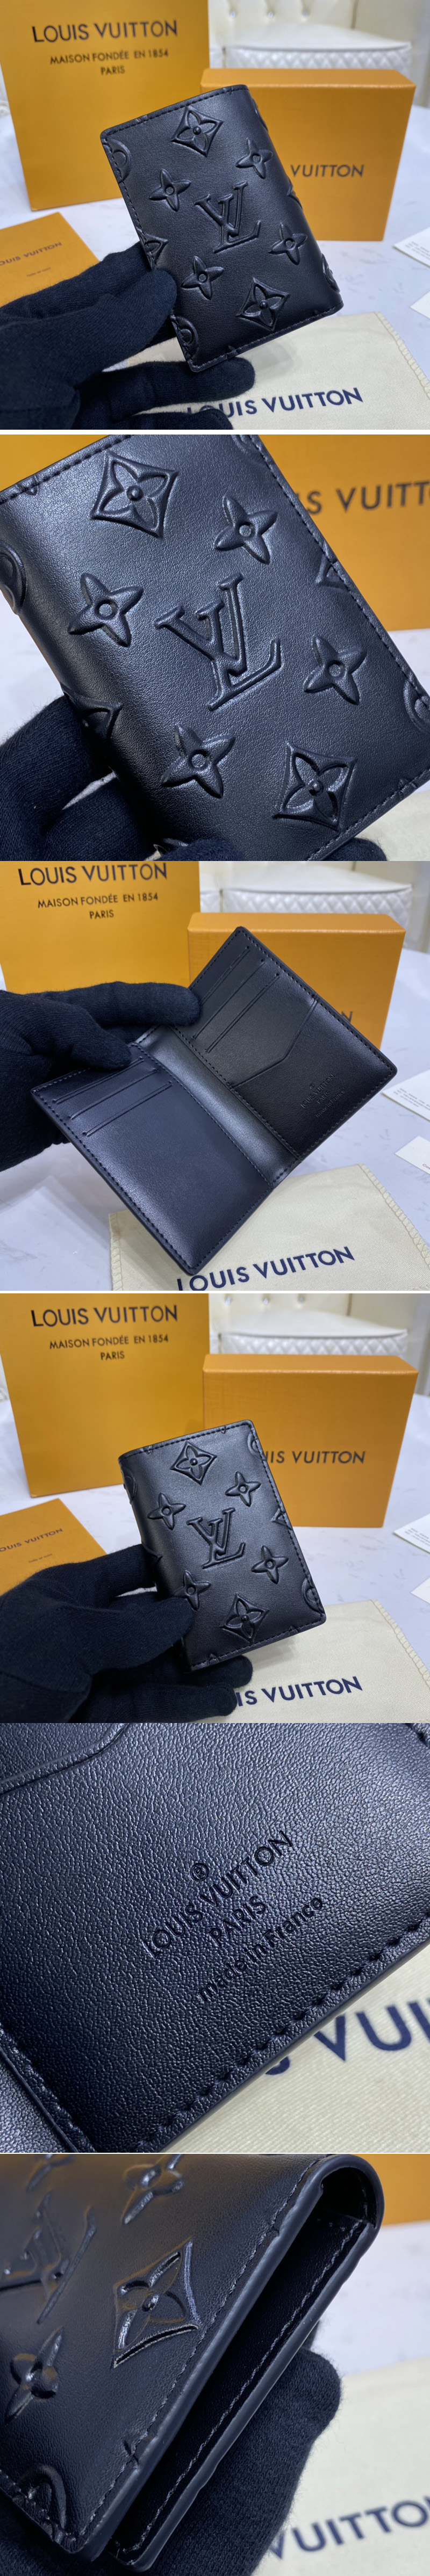 Louis Vuitton Pocket Organiser Review